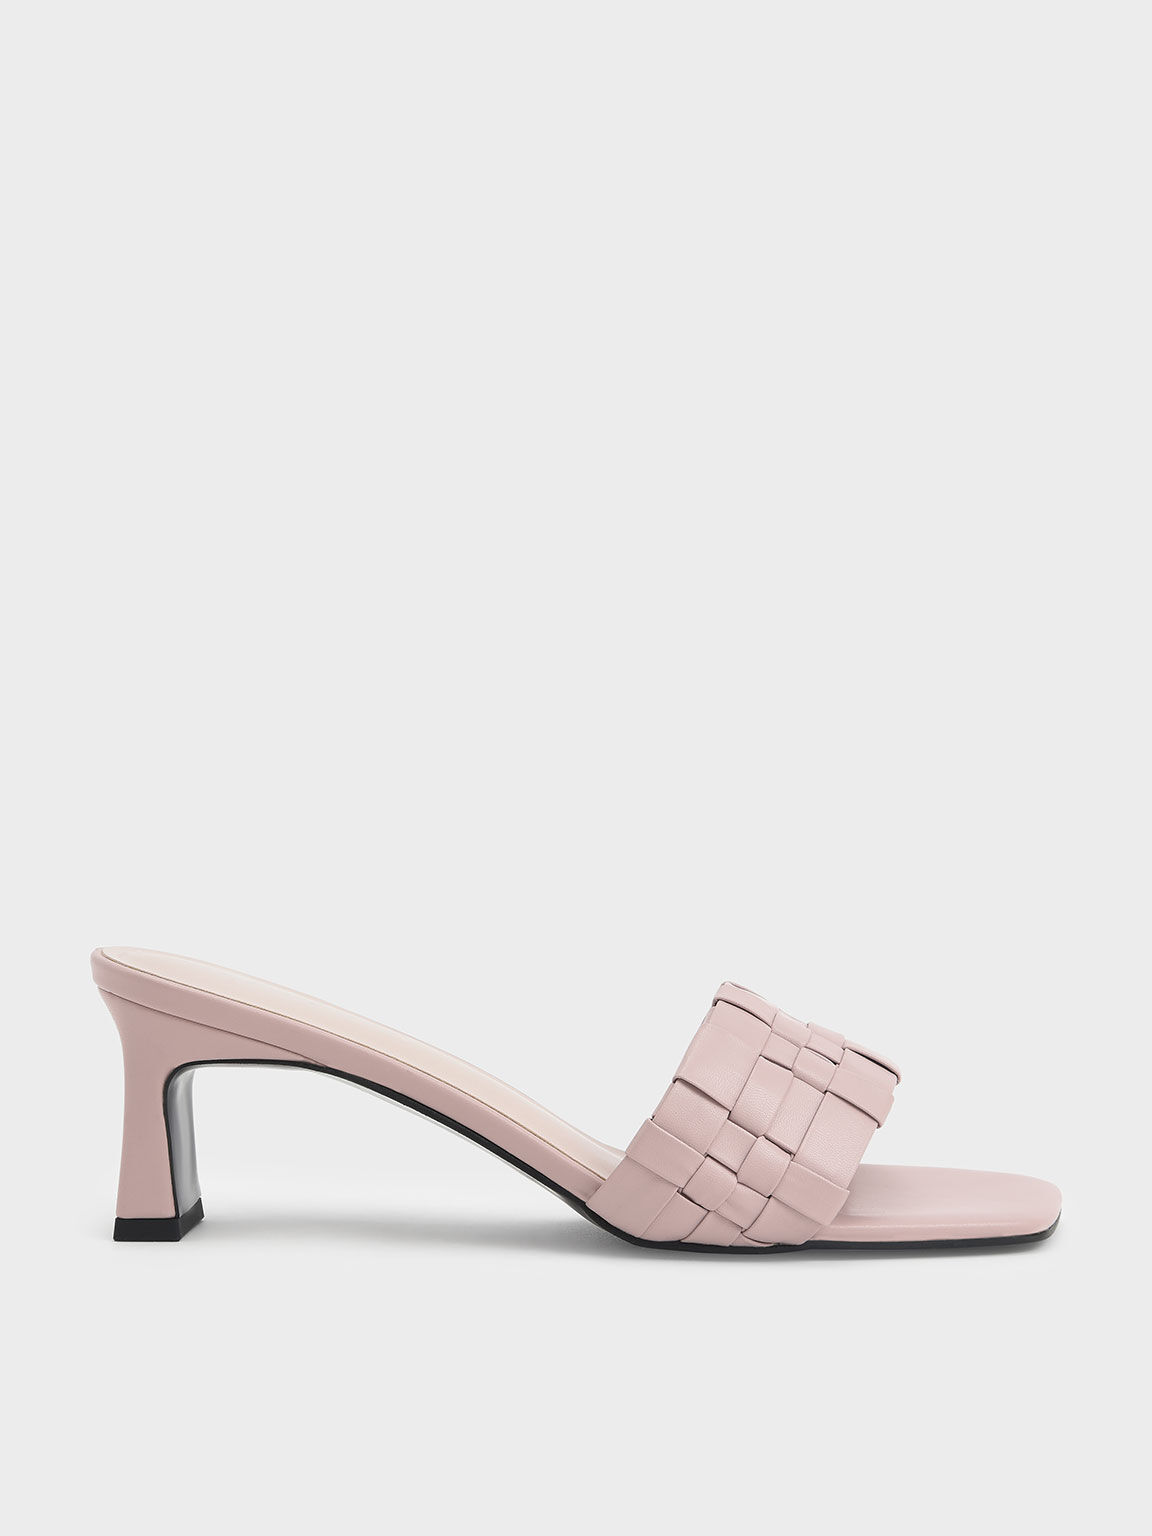 Woven Square Toe Mules, Light Pink, hi-res